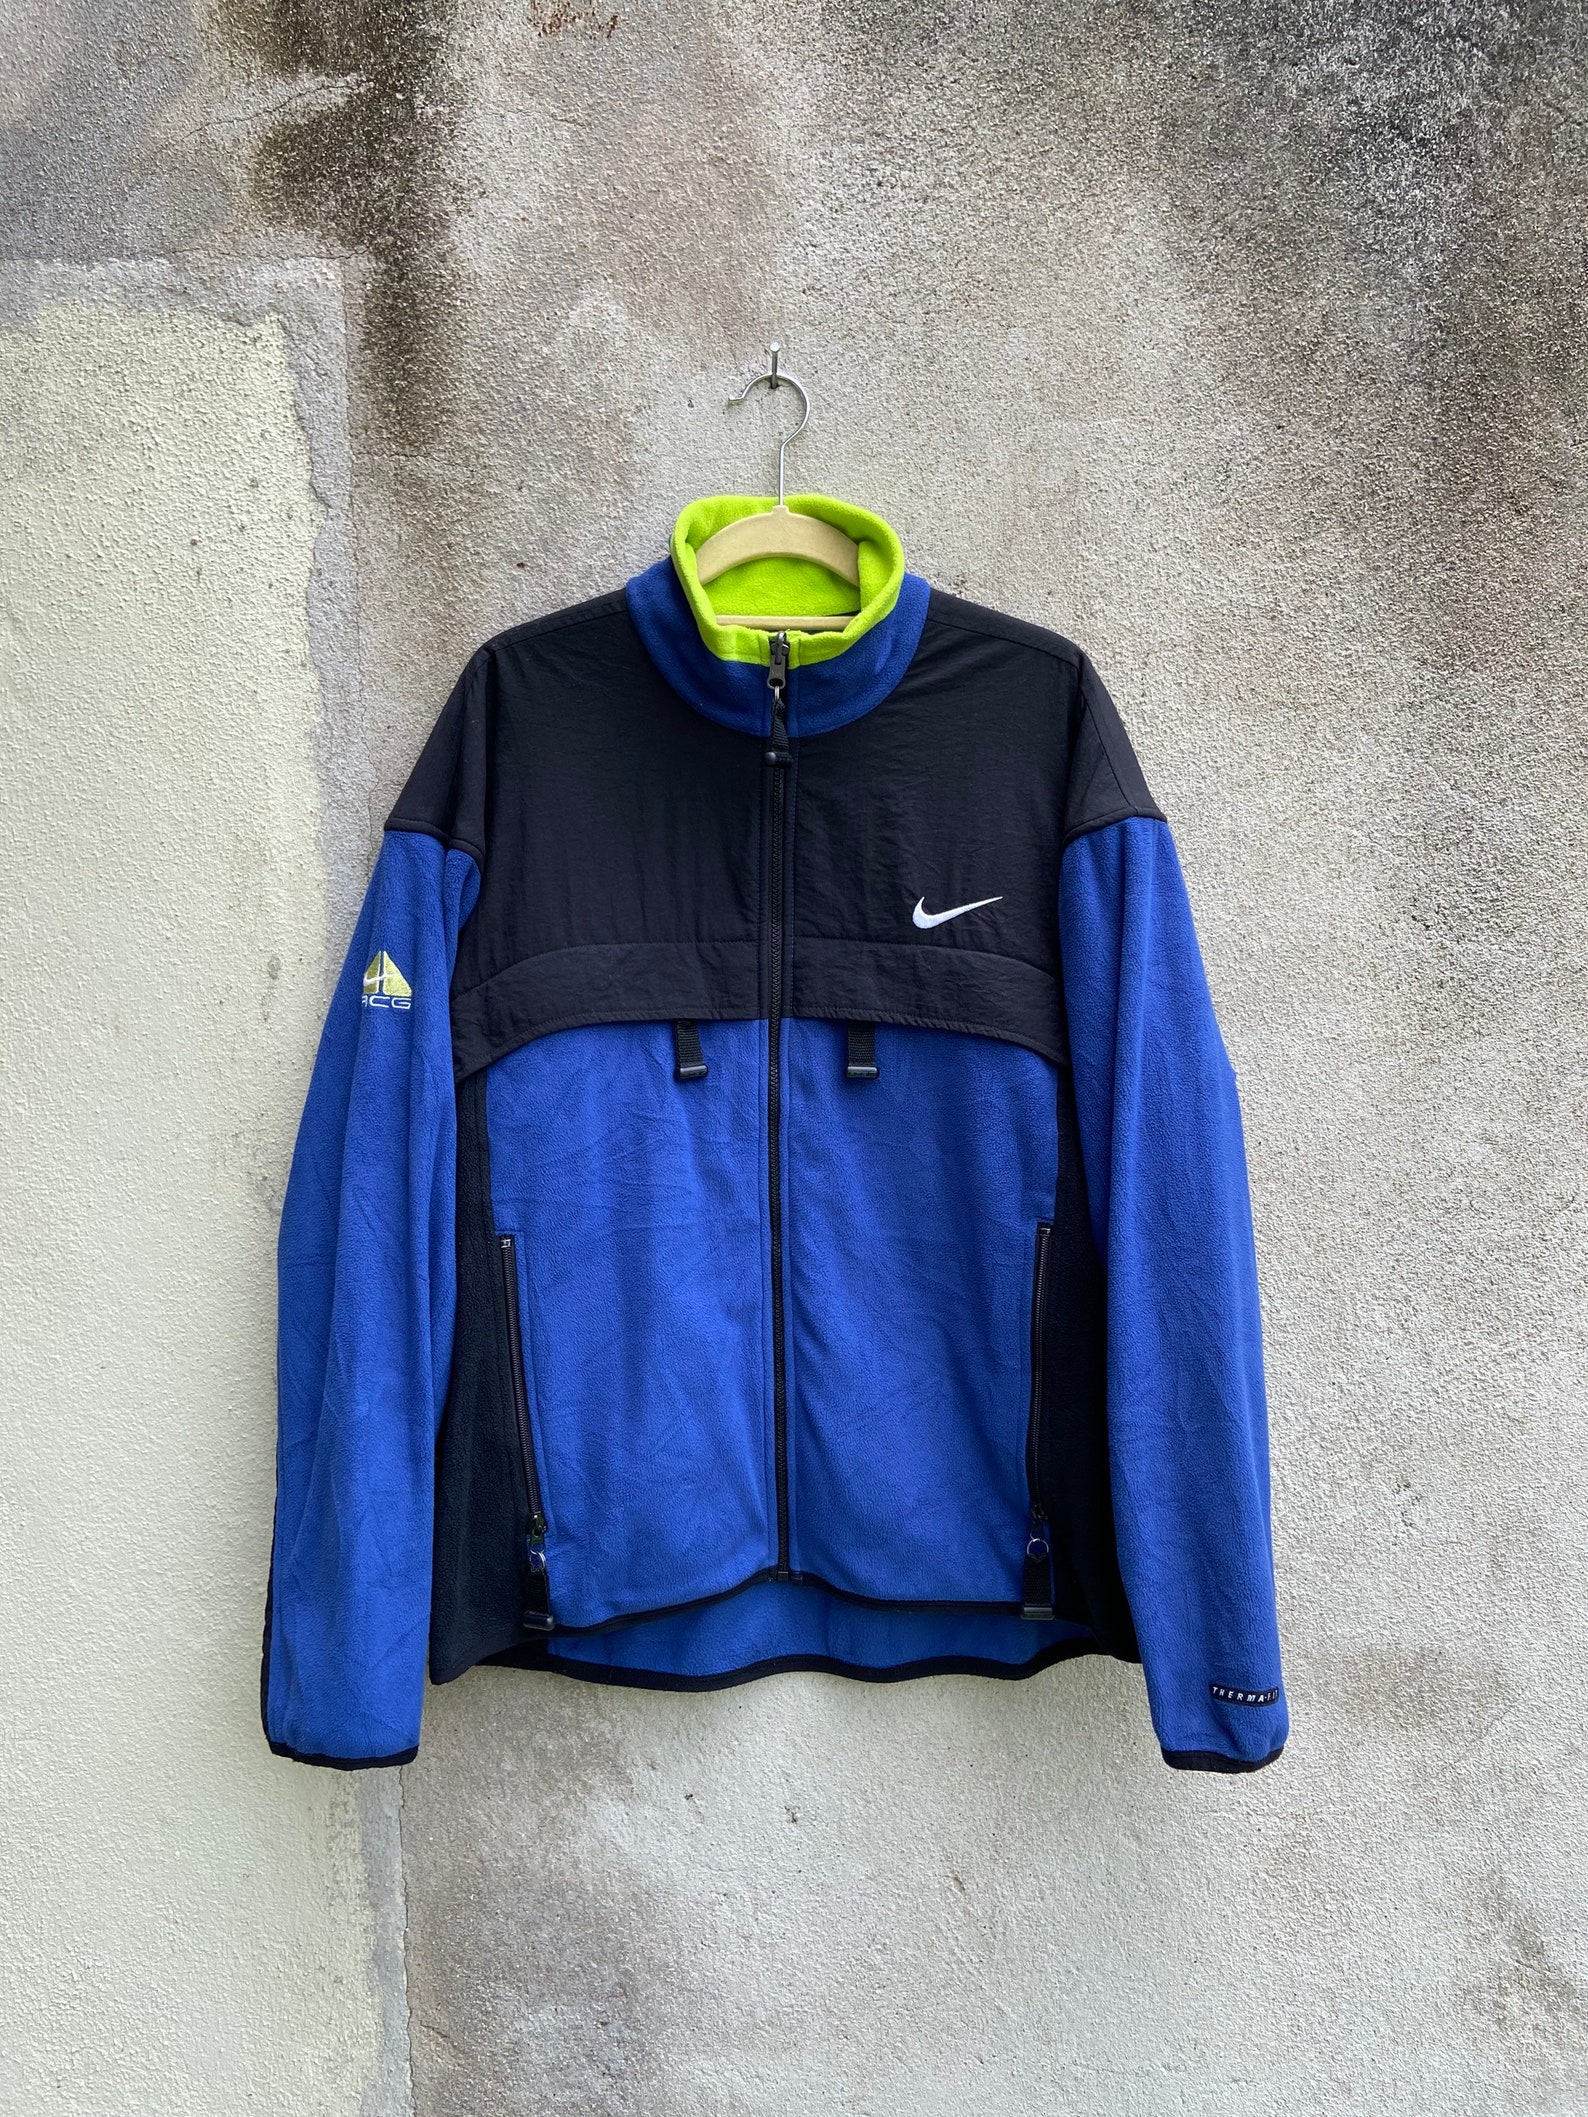 Vintage Nike Acg Fleece Jacket All Conditions Gear Size Medium | Etsy